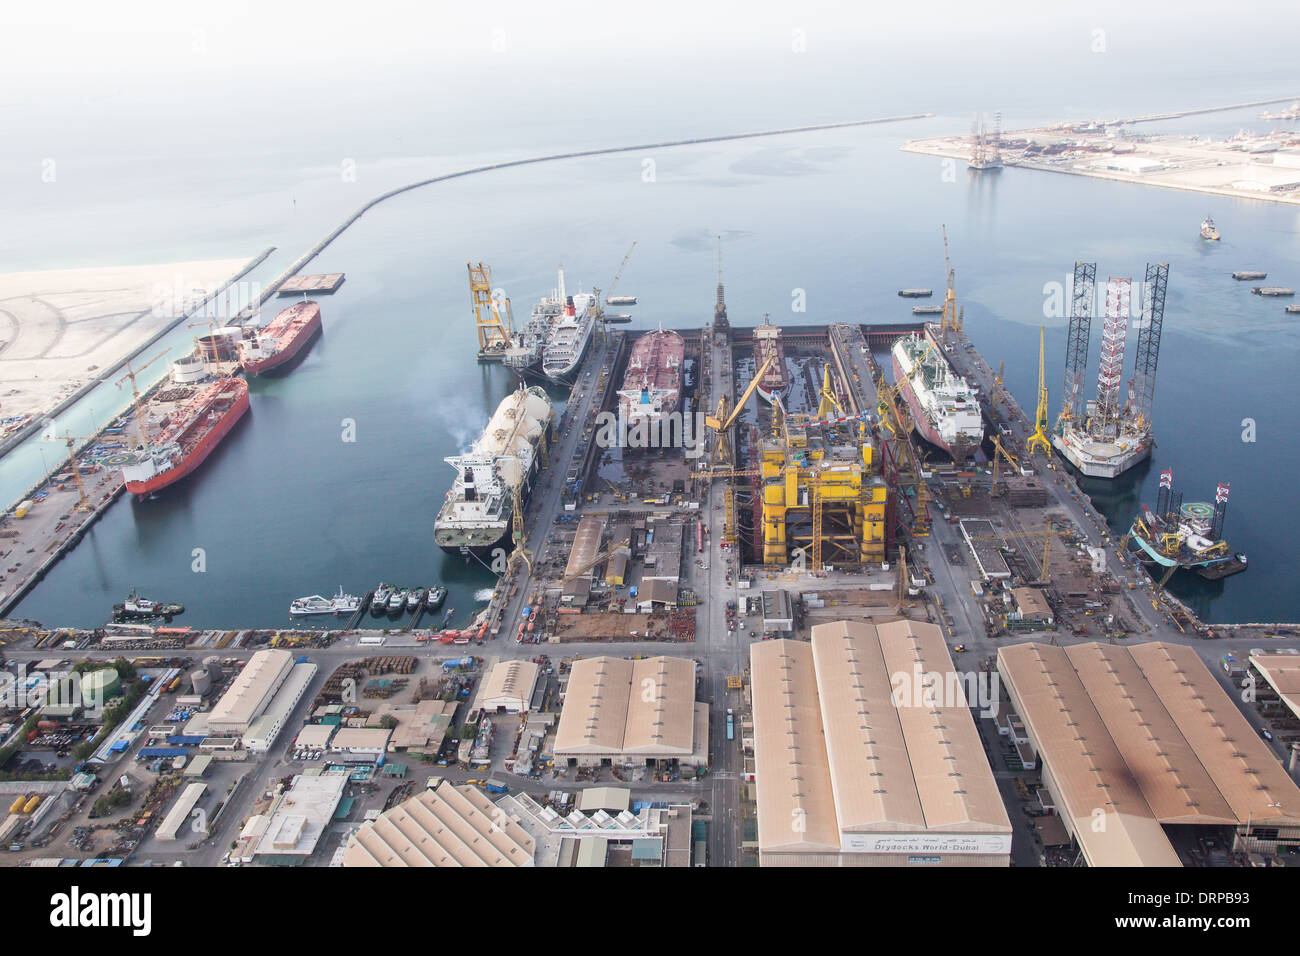 Port rashid docks hi-res stock photography and images - Alamy